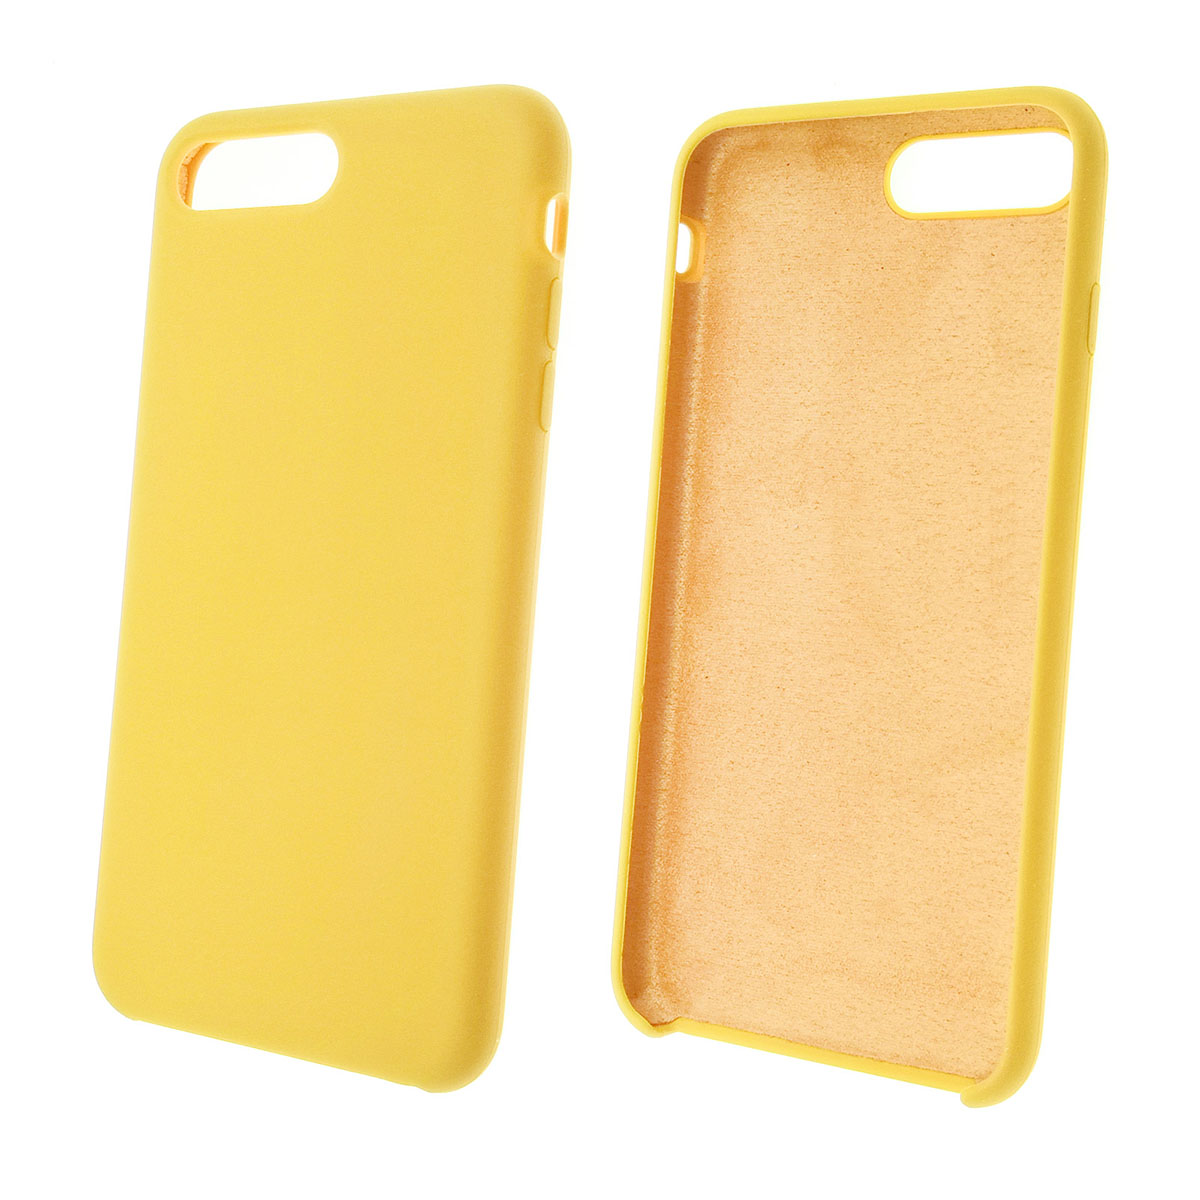 Чехол накладка Silicon Case для APPLE iPhone 7 Plus, iPhone 8 Plus, силикон, бархат, цвет желтый.